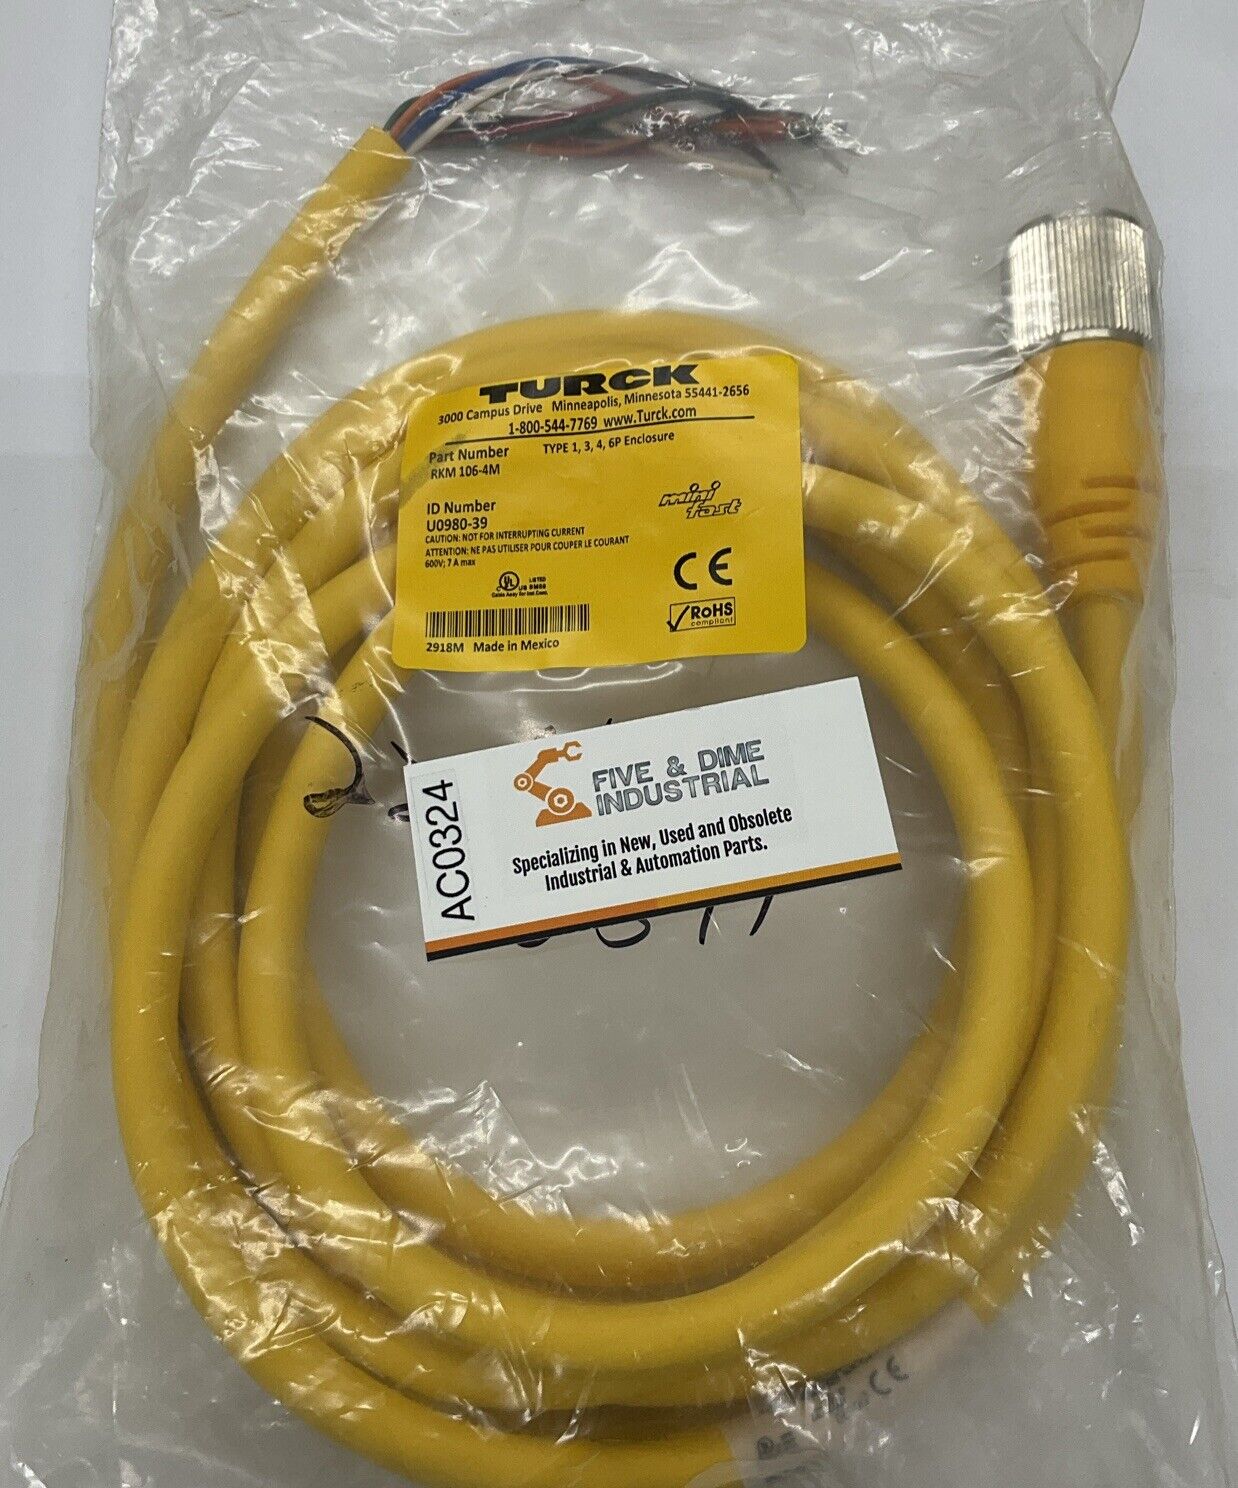 Turck RKM106-4M / U0980-39 Single End 10-Pole 4 Meters Female Cable (CBL156)